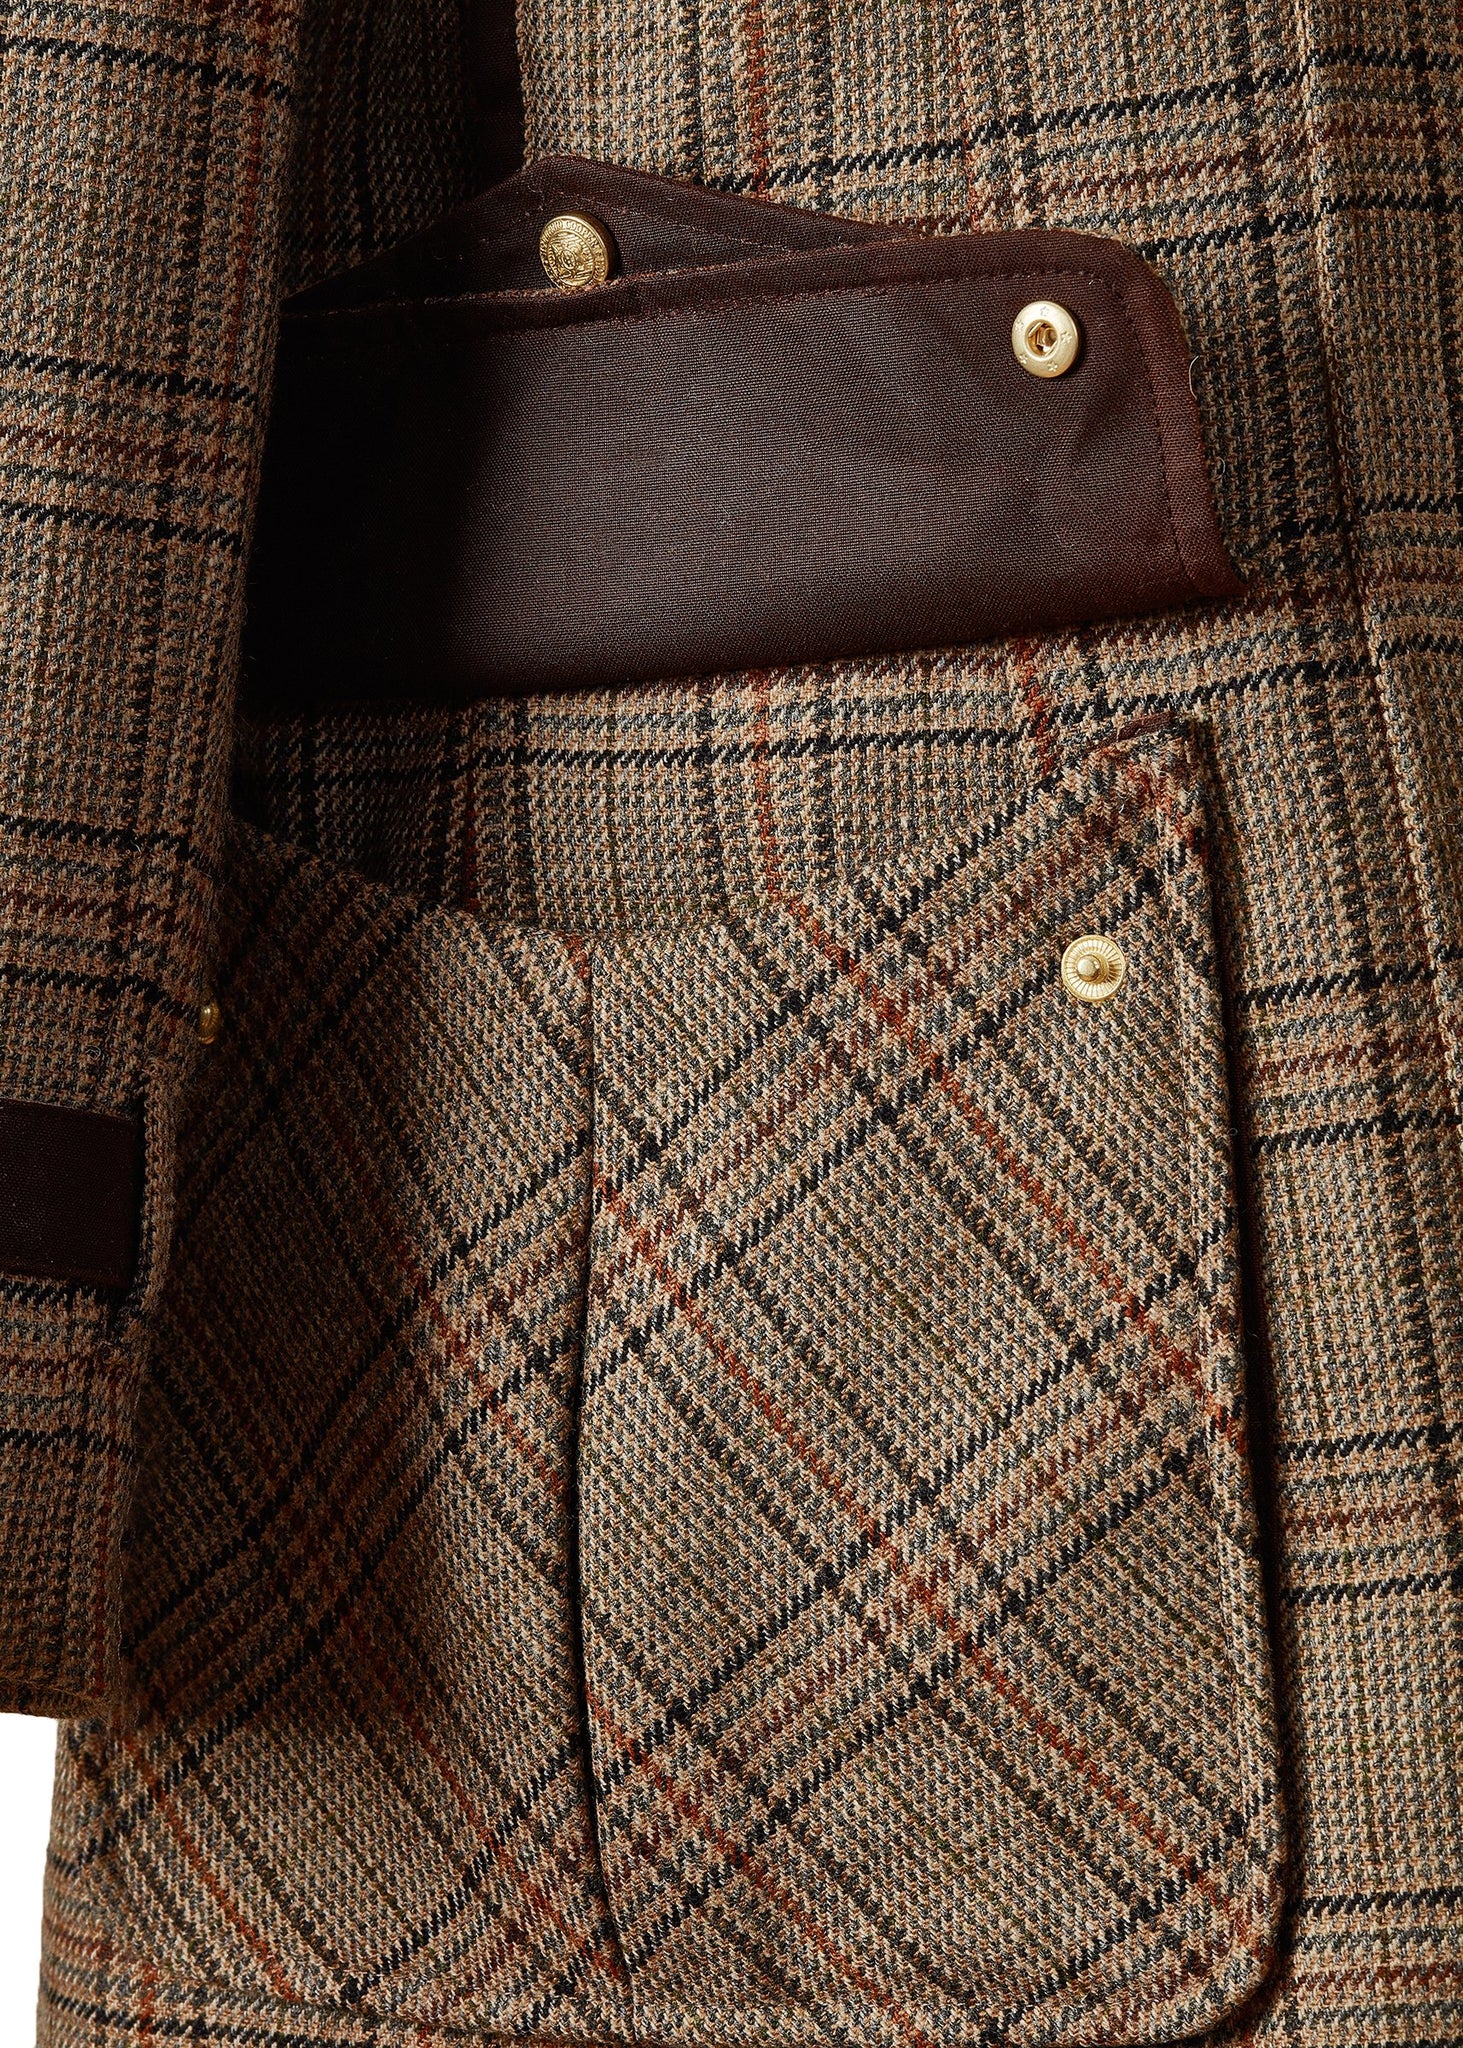 Open pocket detail of womans brown tartan tweed field coat